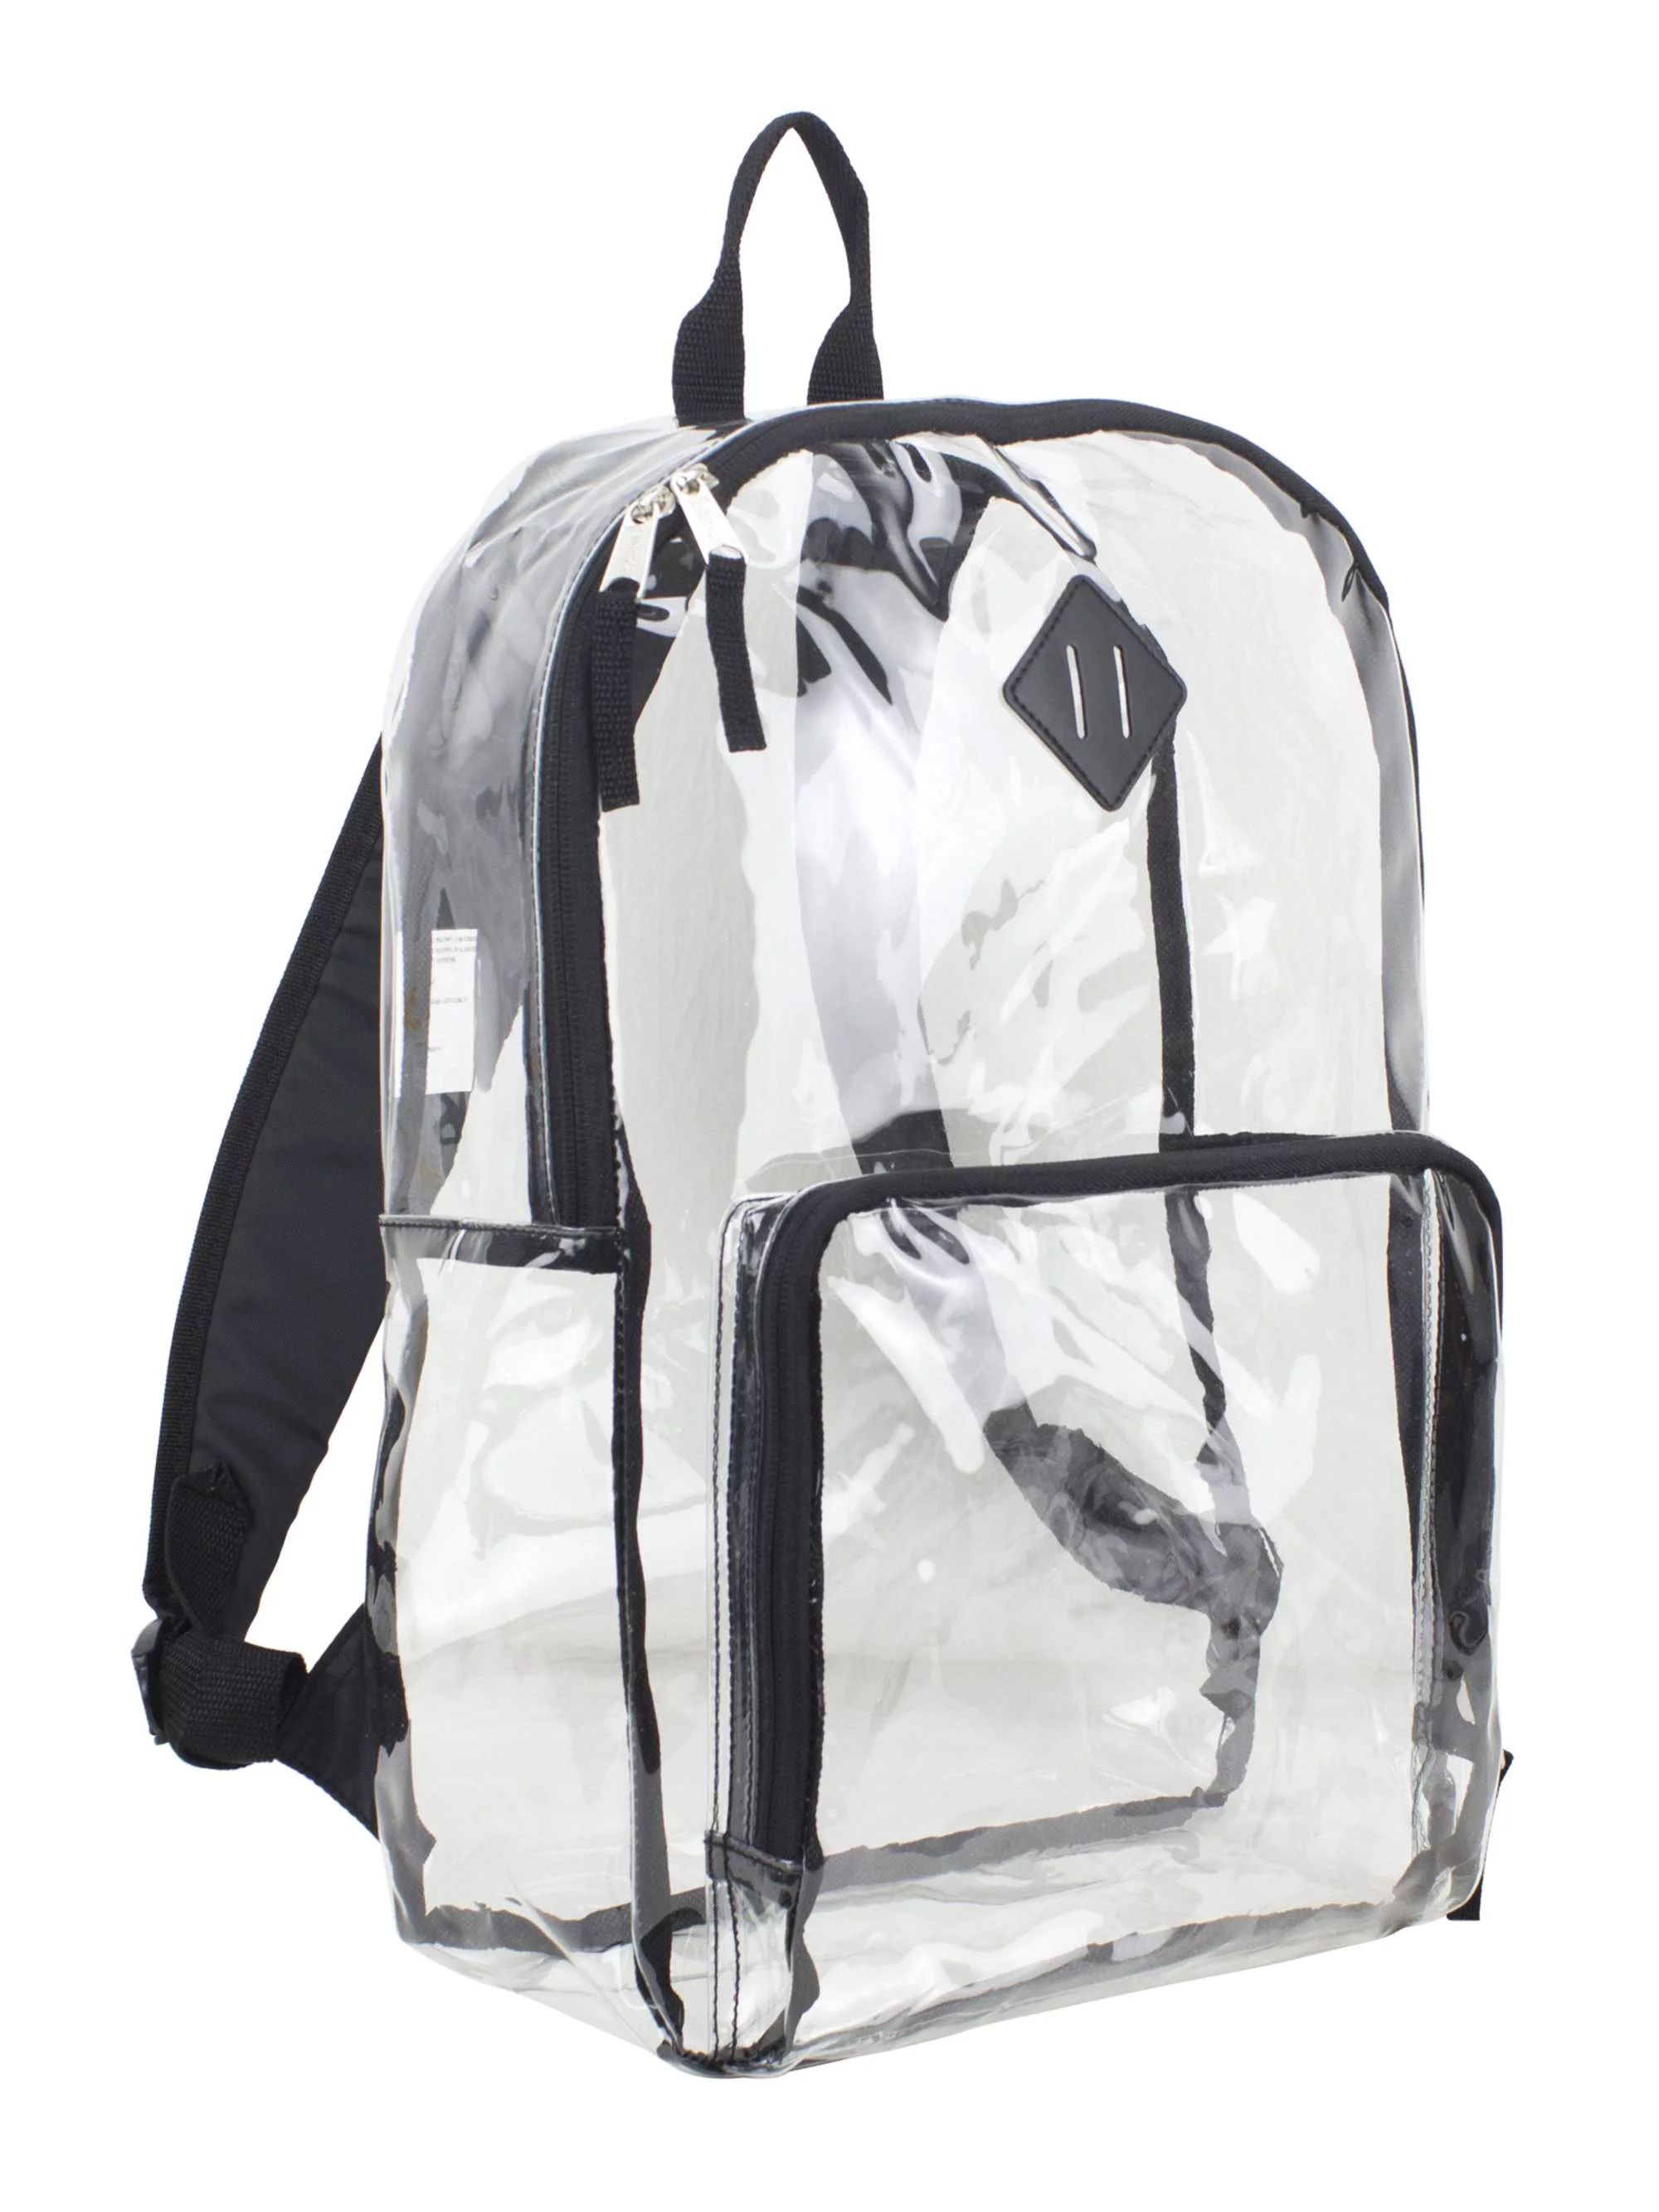 Eastsport Multi-Purpose Clear Unisex Backpack with Adjustable Straps | Walmart (US)